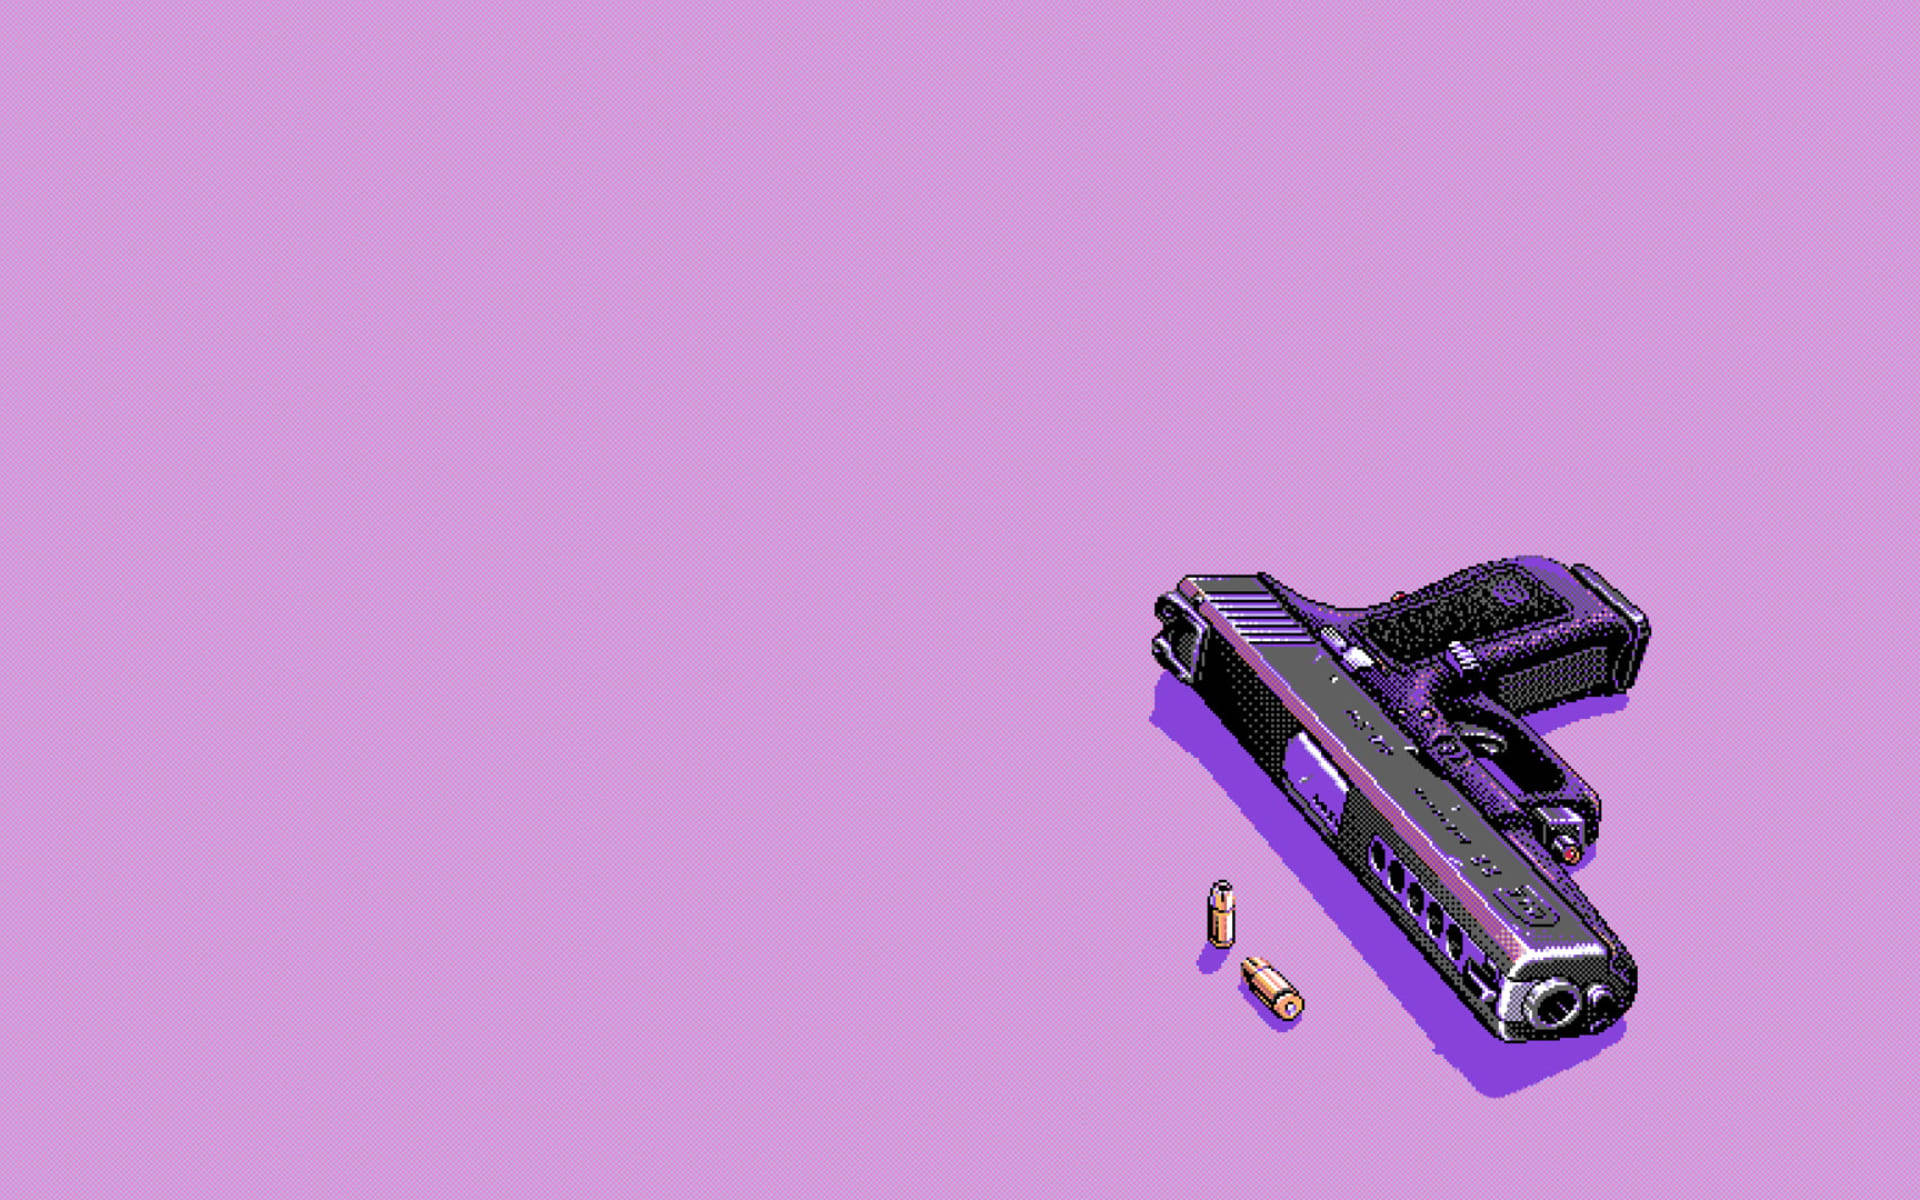 Retro 8-bit Glock Pistol